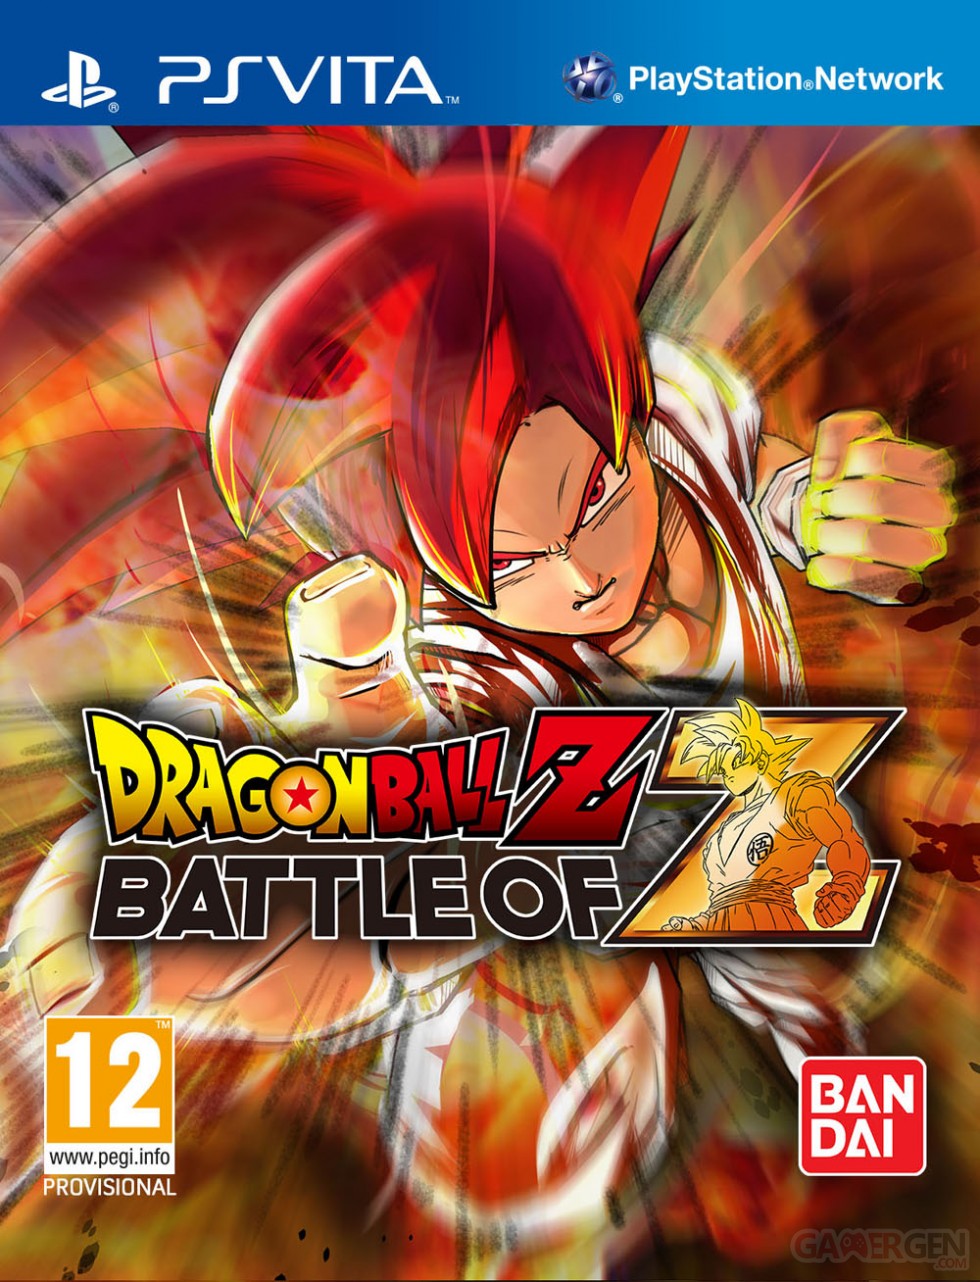 Dragon Ball Z Battle of Z jaquette psvita21.06.2013 (16)